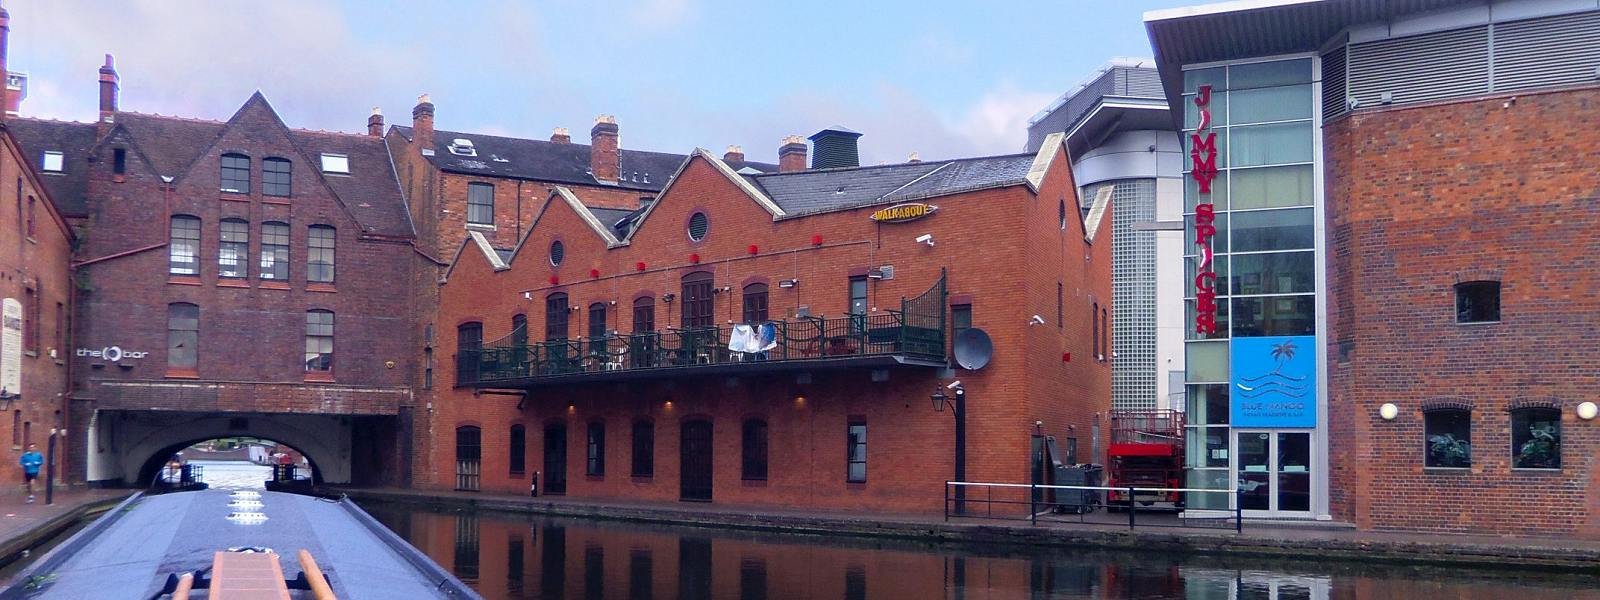 Birmingham Canal Boats